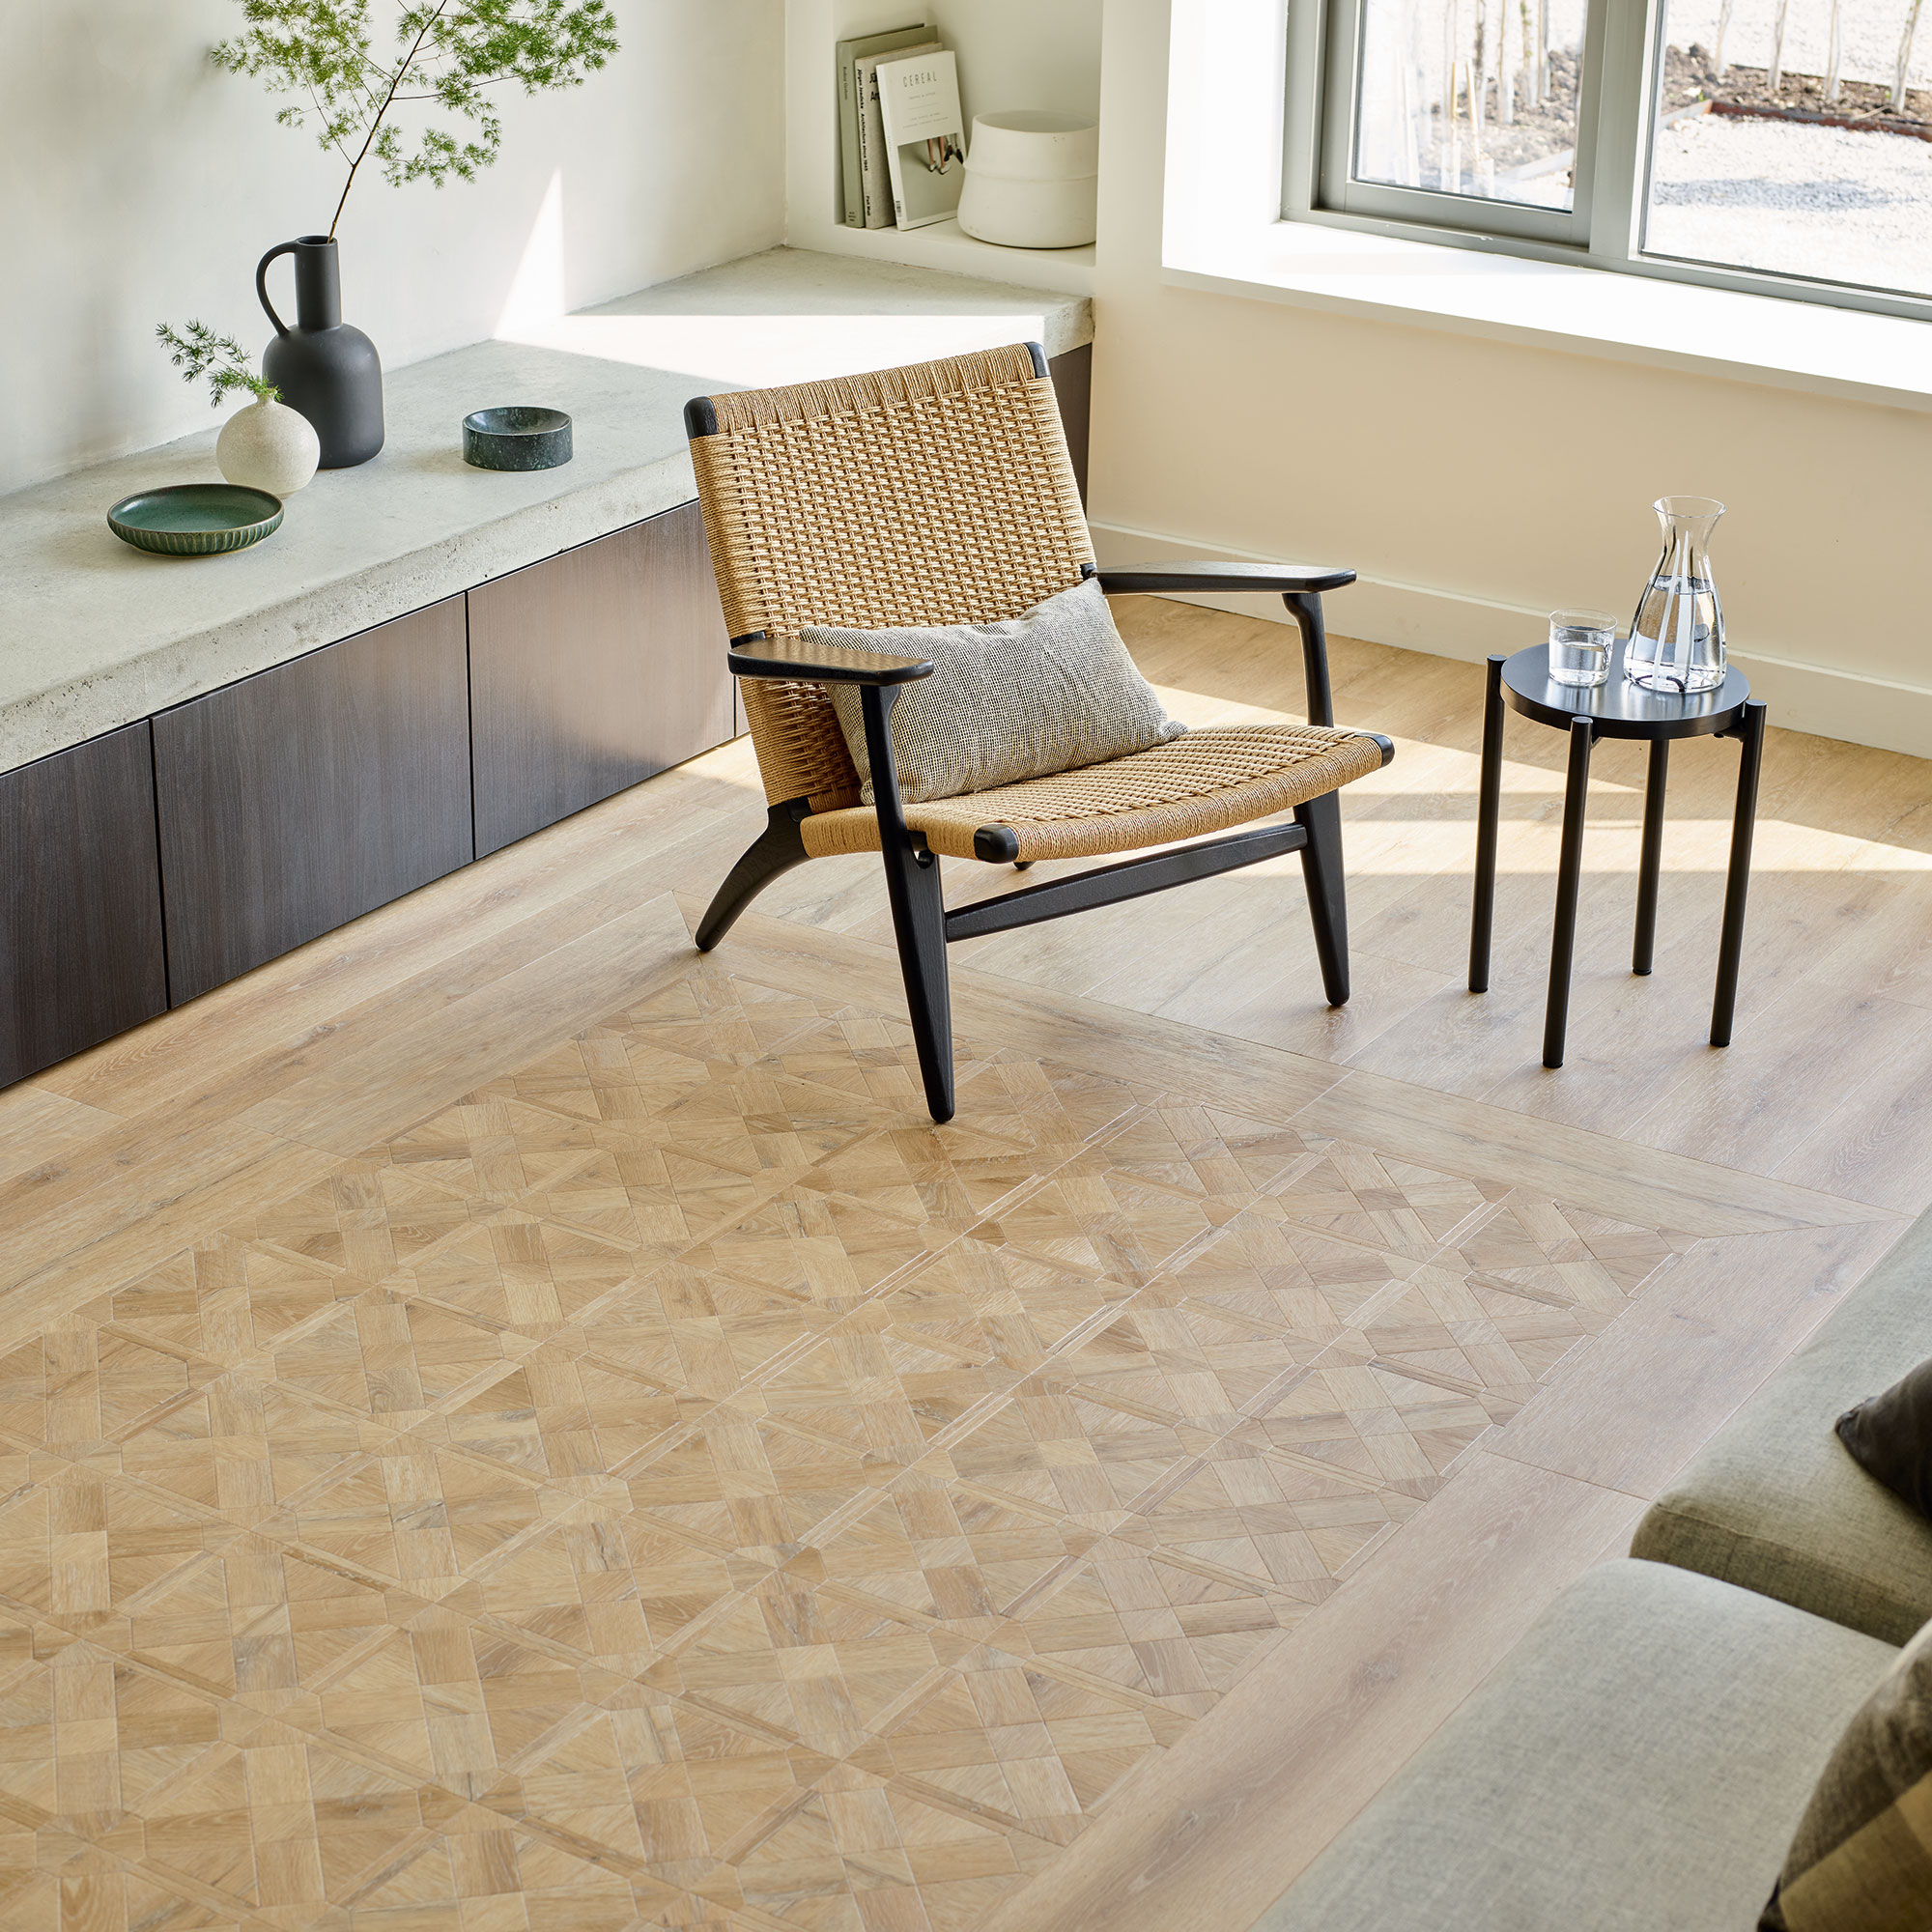 Wood -style flooring in parquet design